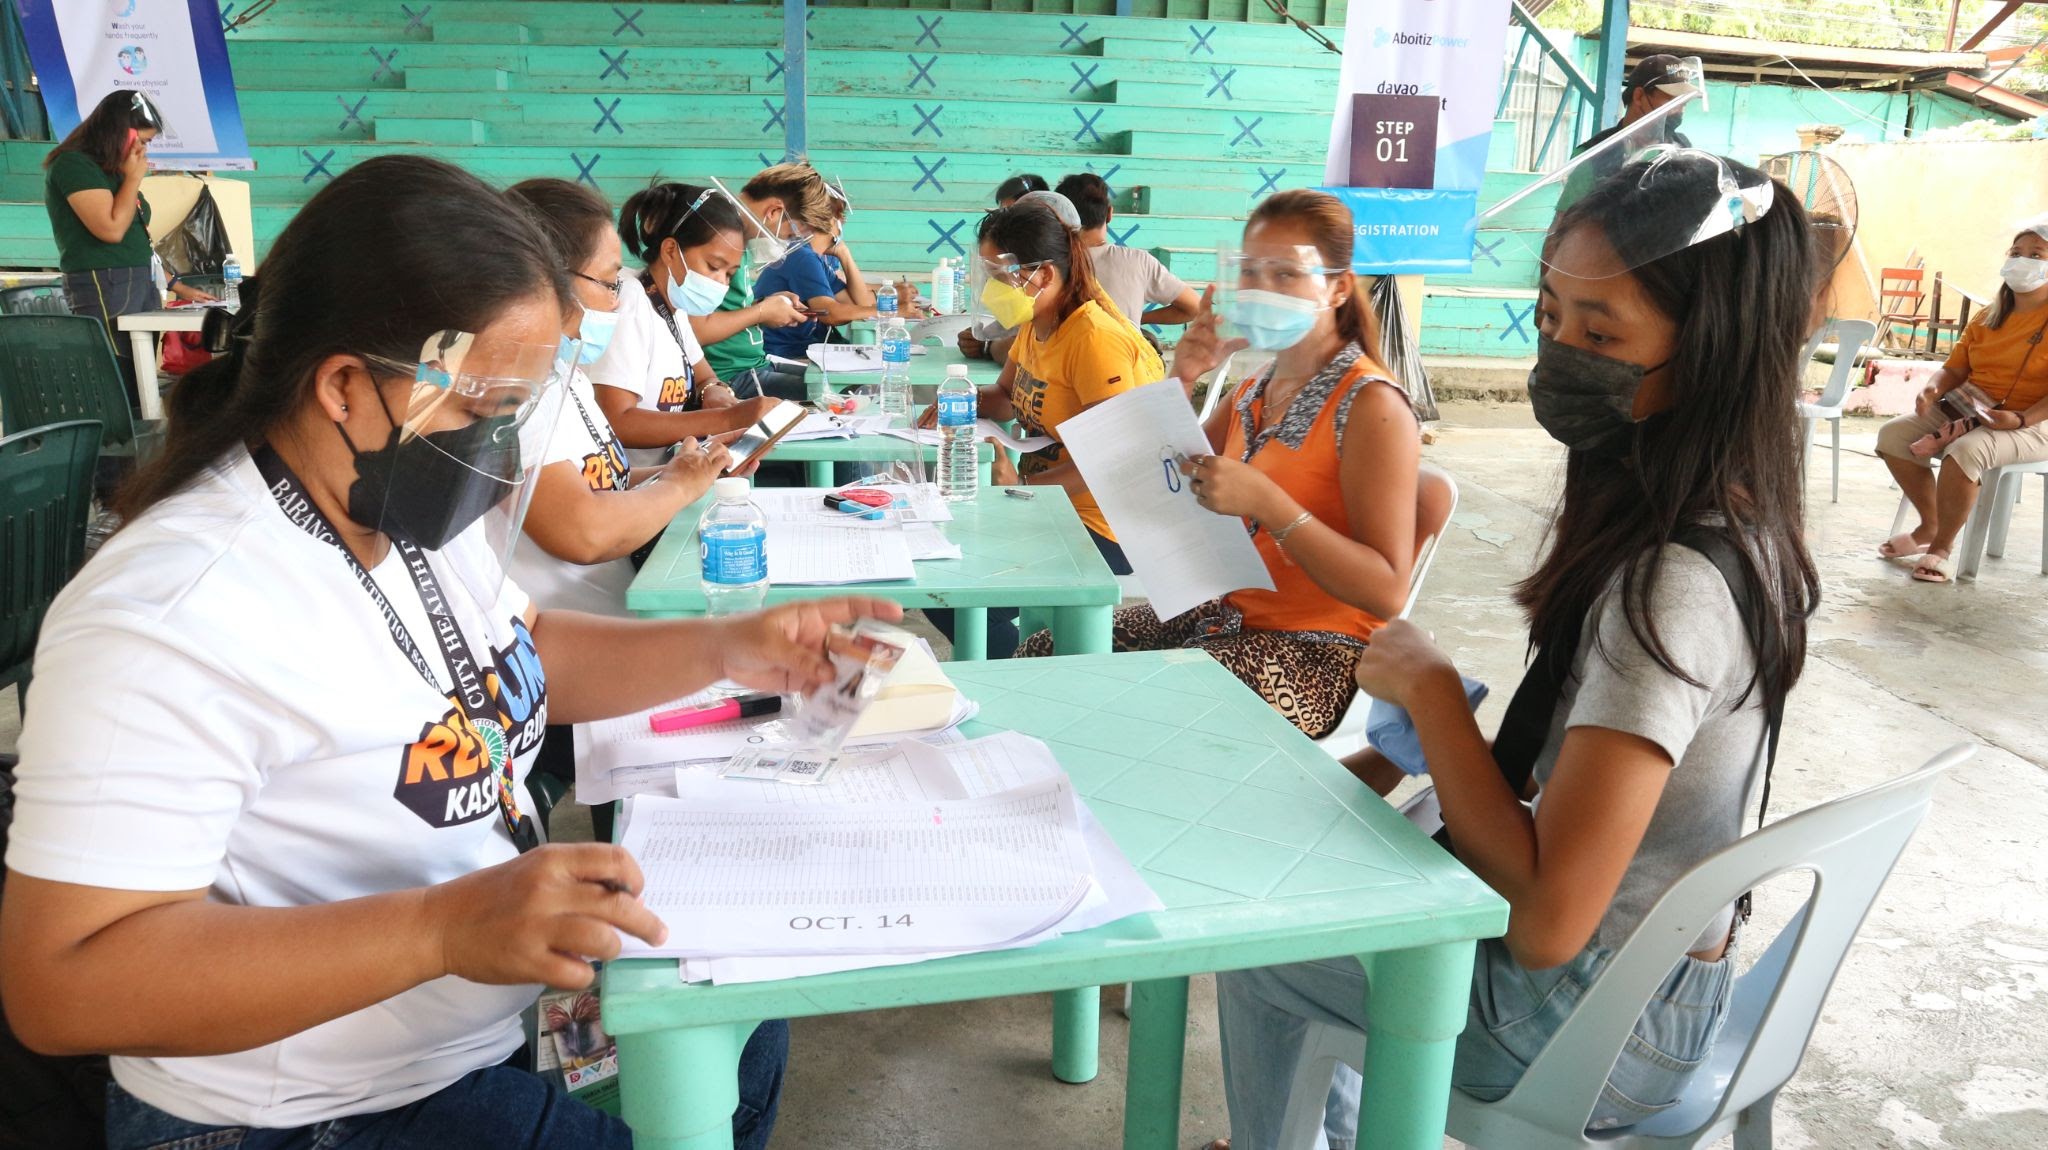 Aboitiz-LGU partnership ramps up vaccination drive in Davao